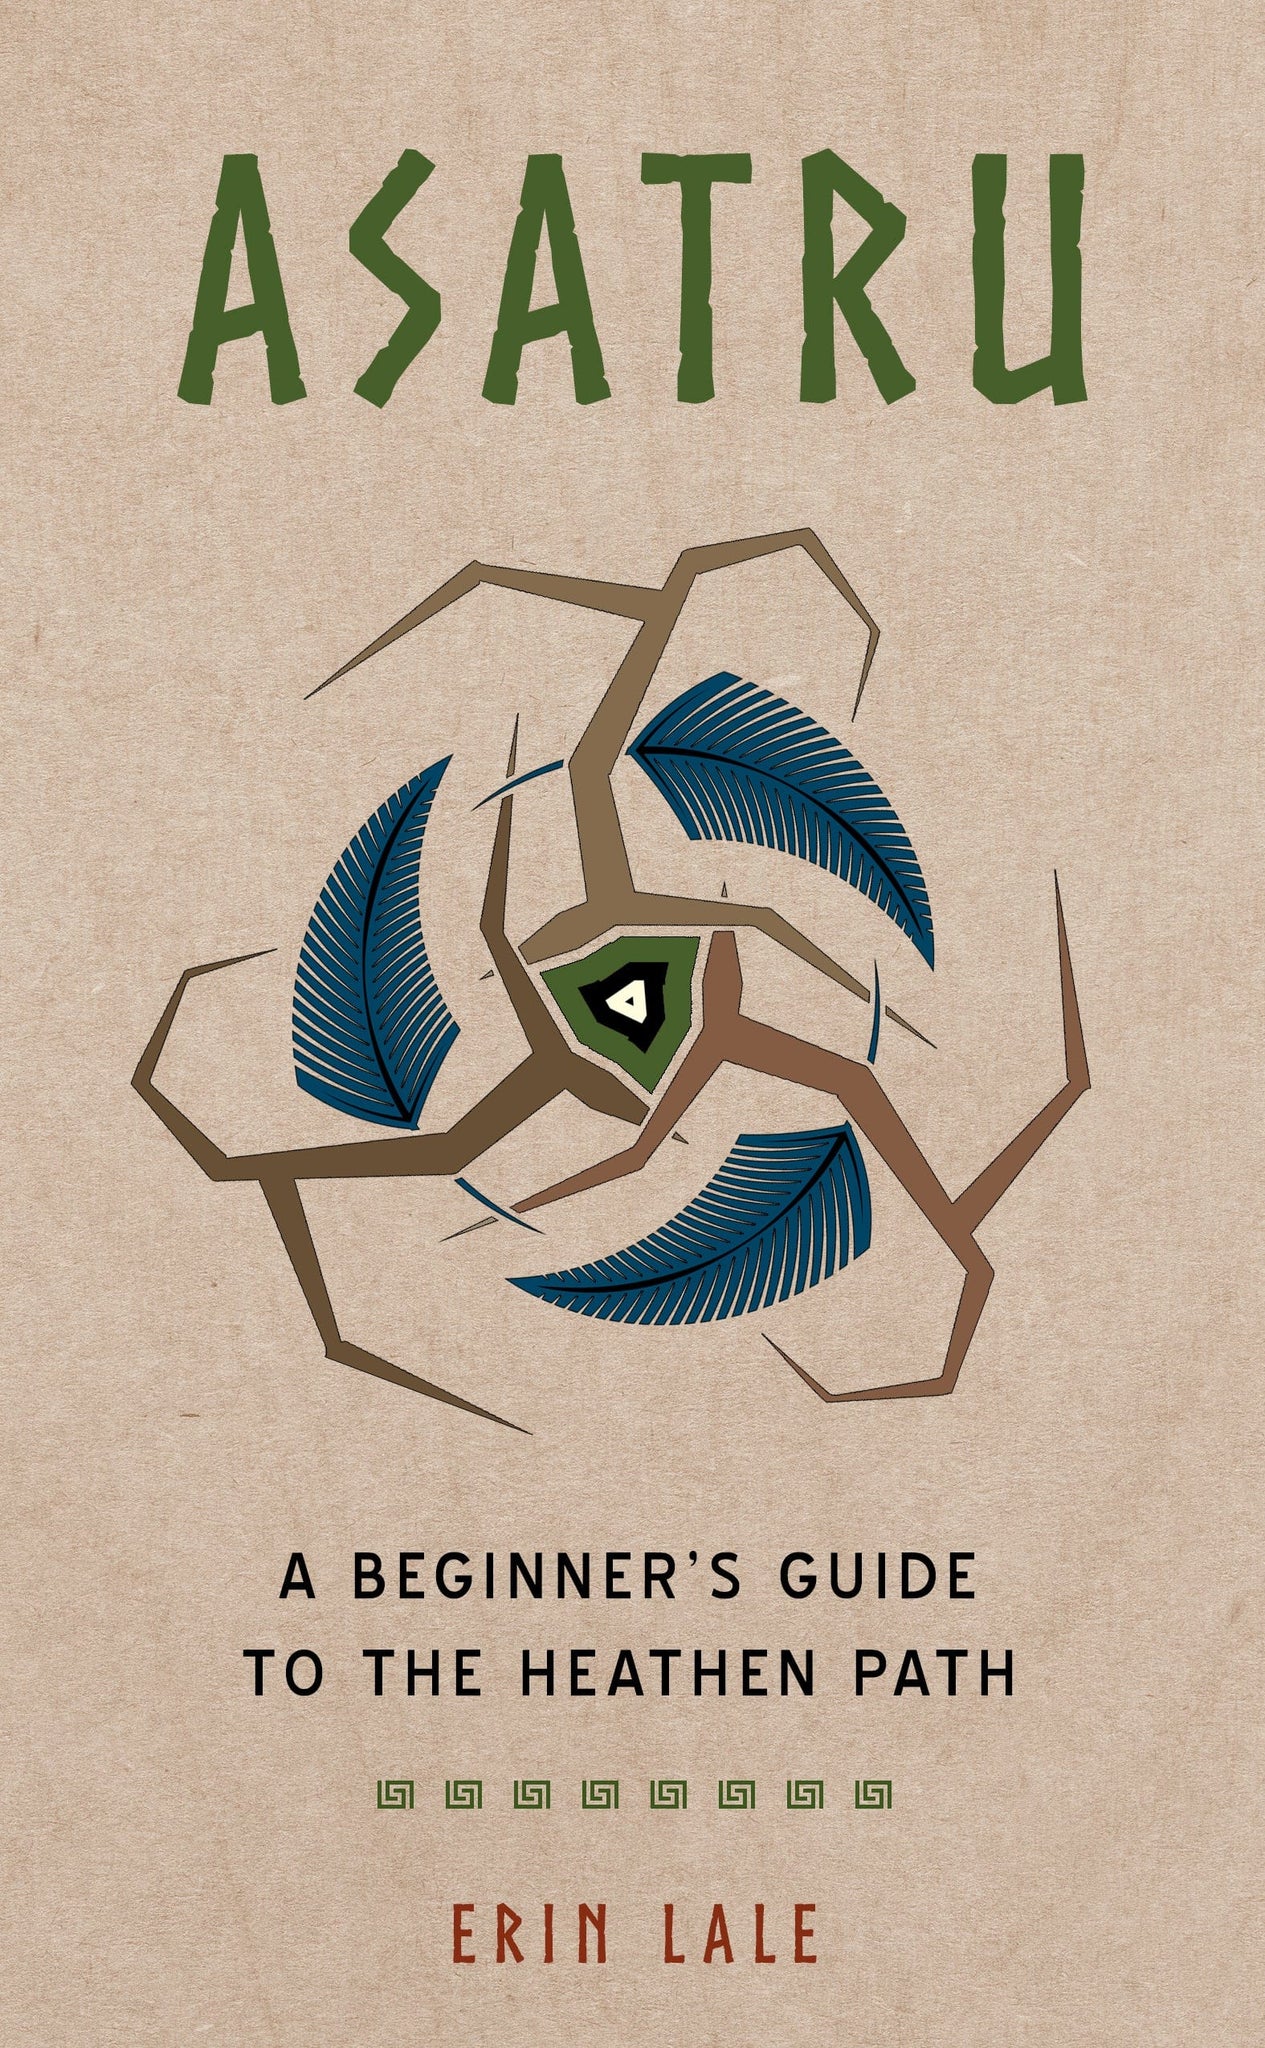 Asatru, Beginner's Guide to the Heathen Path by Erin Lale